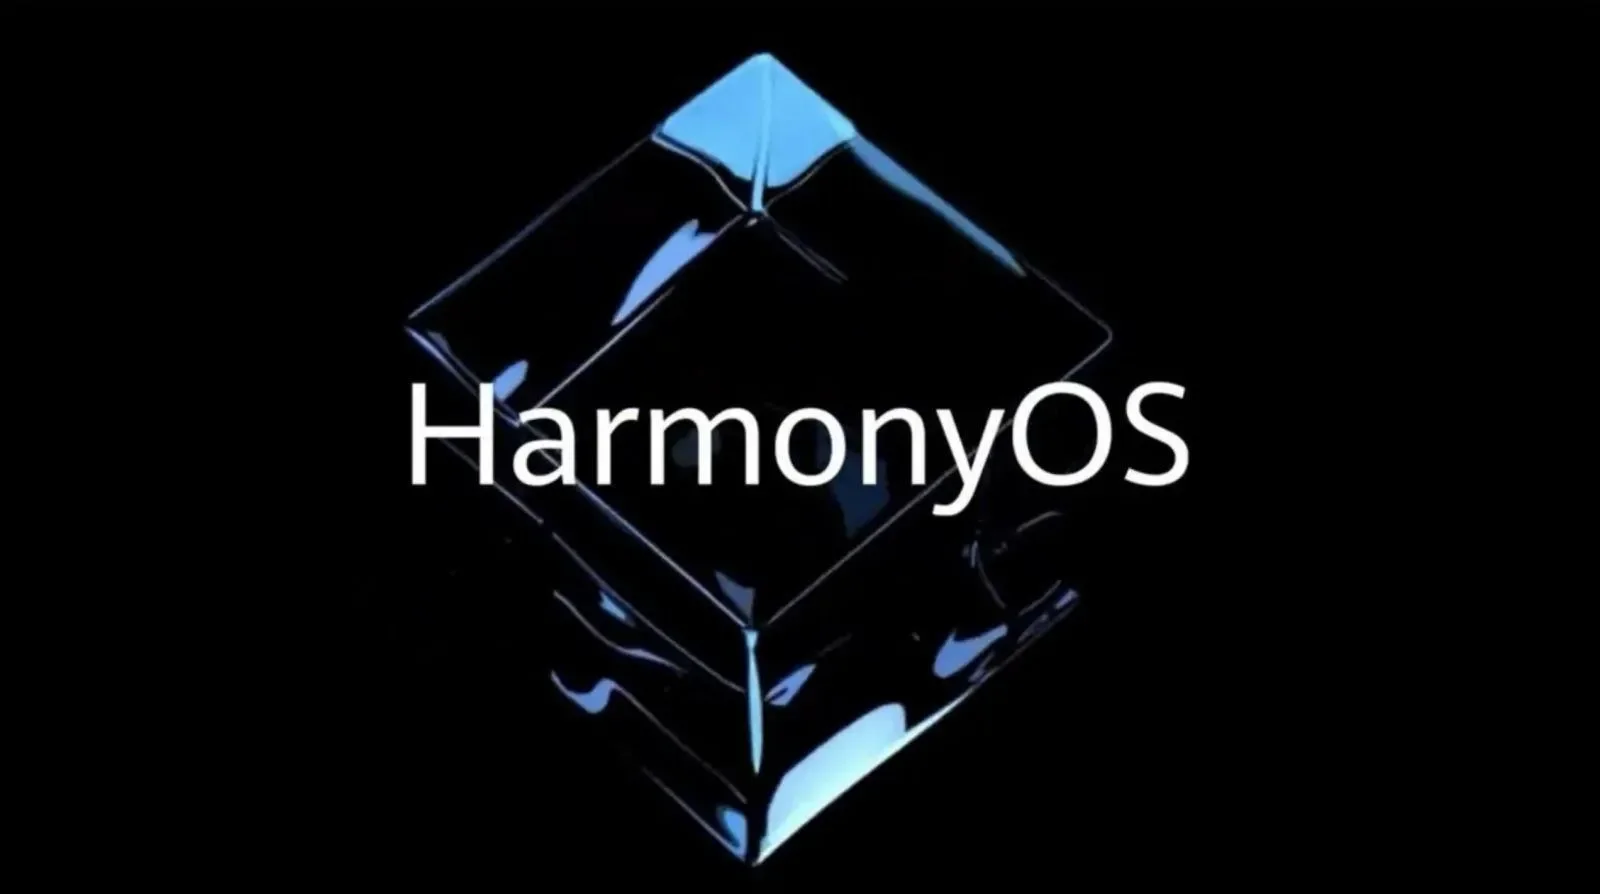 HarmonyOS 3 announced ahead of schedule